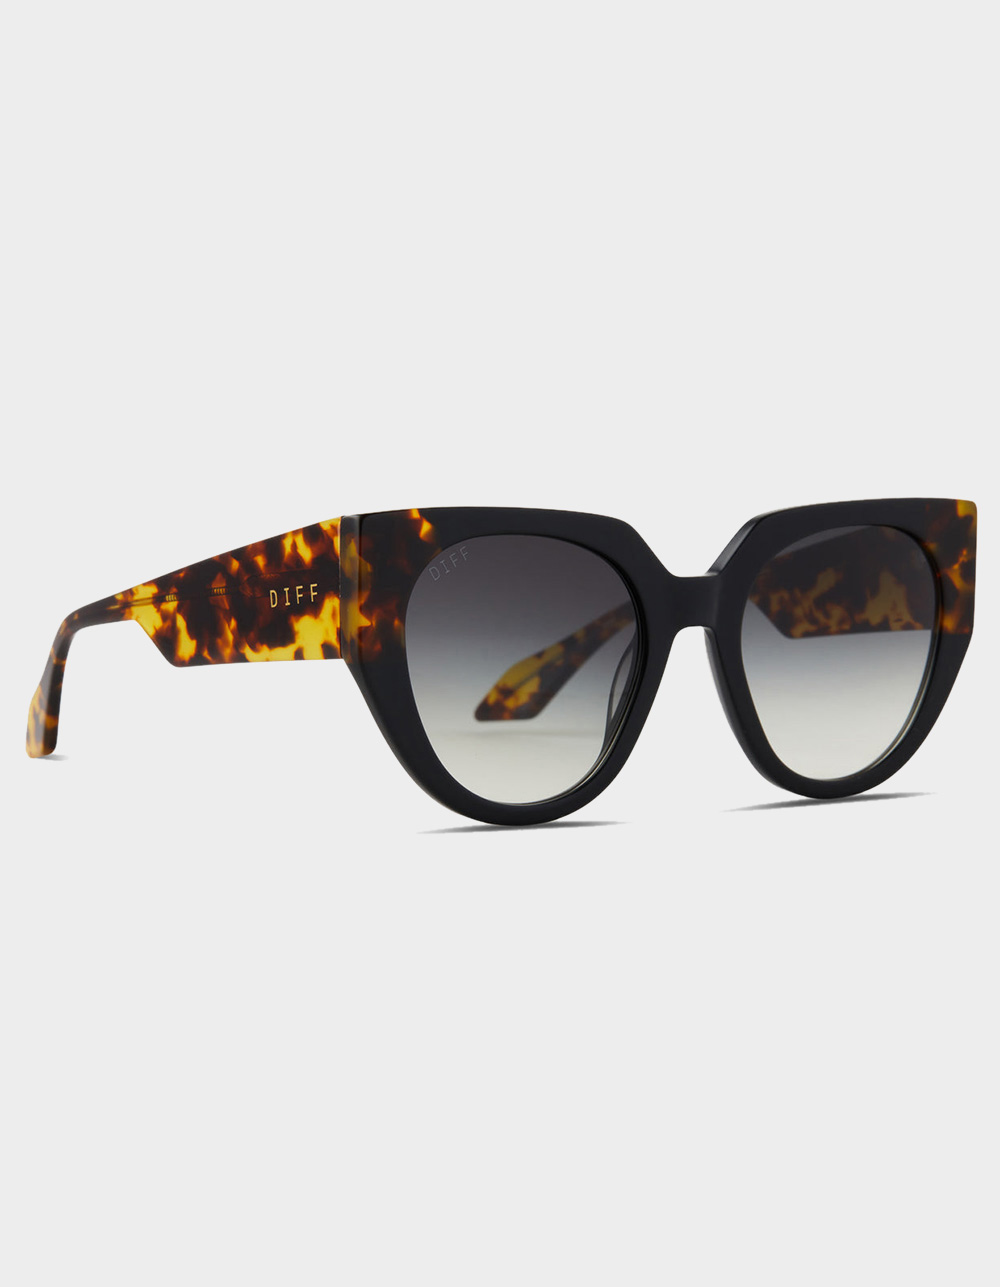 DIFF EYEWEAR Ivy Polarized Sunglasses